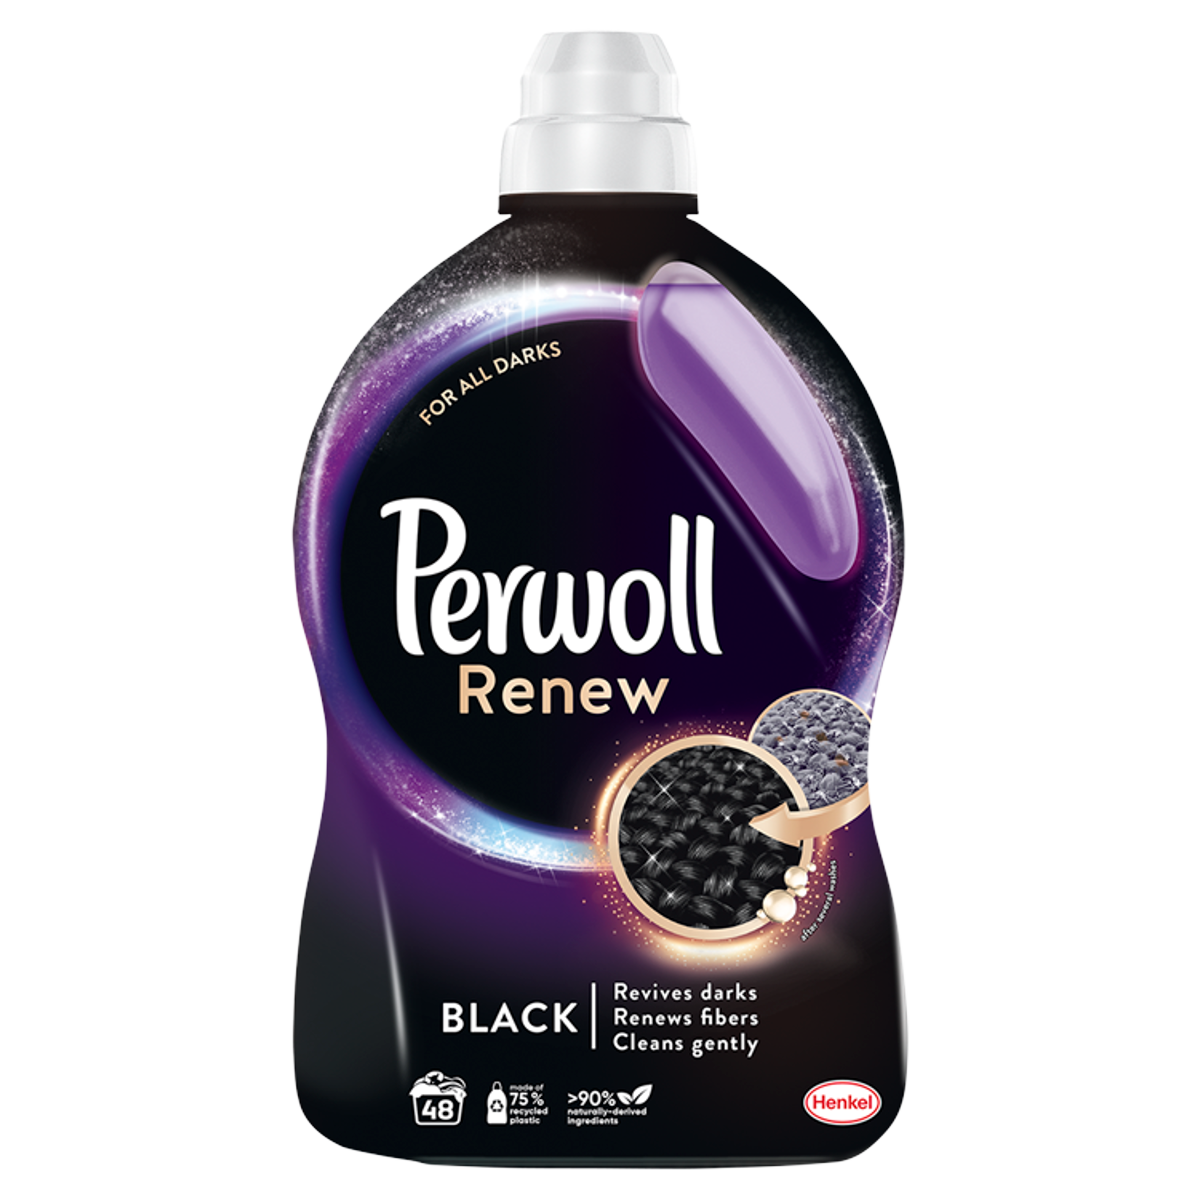 DETERGENT PERWOLL RENEW BLACK 48 SPAL.2880ML